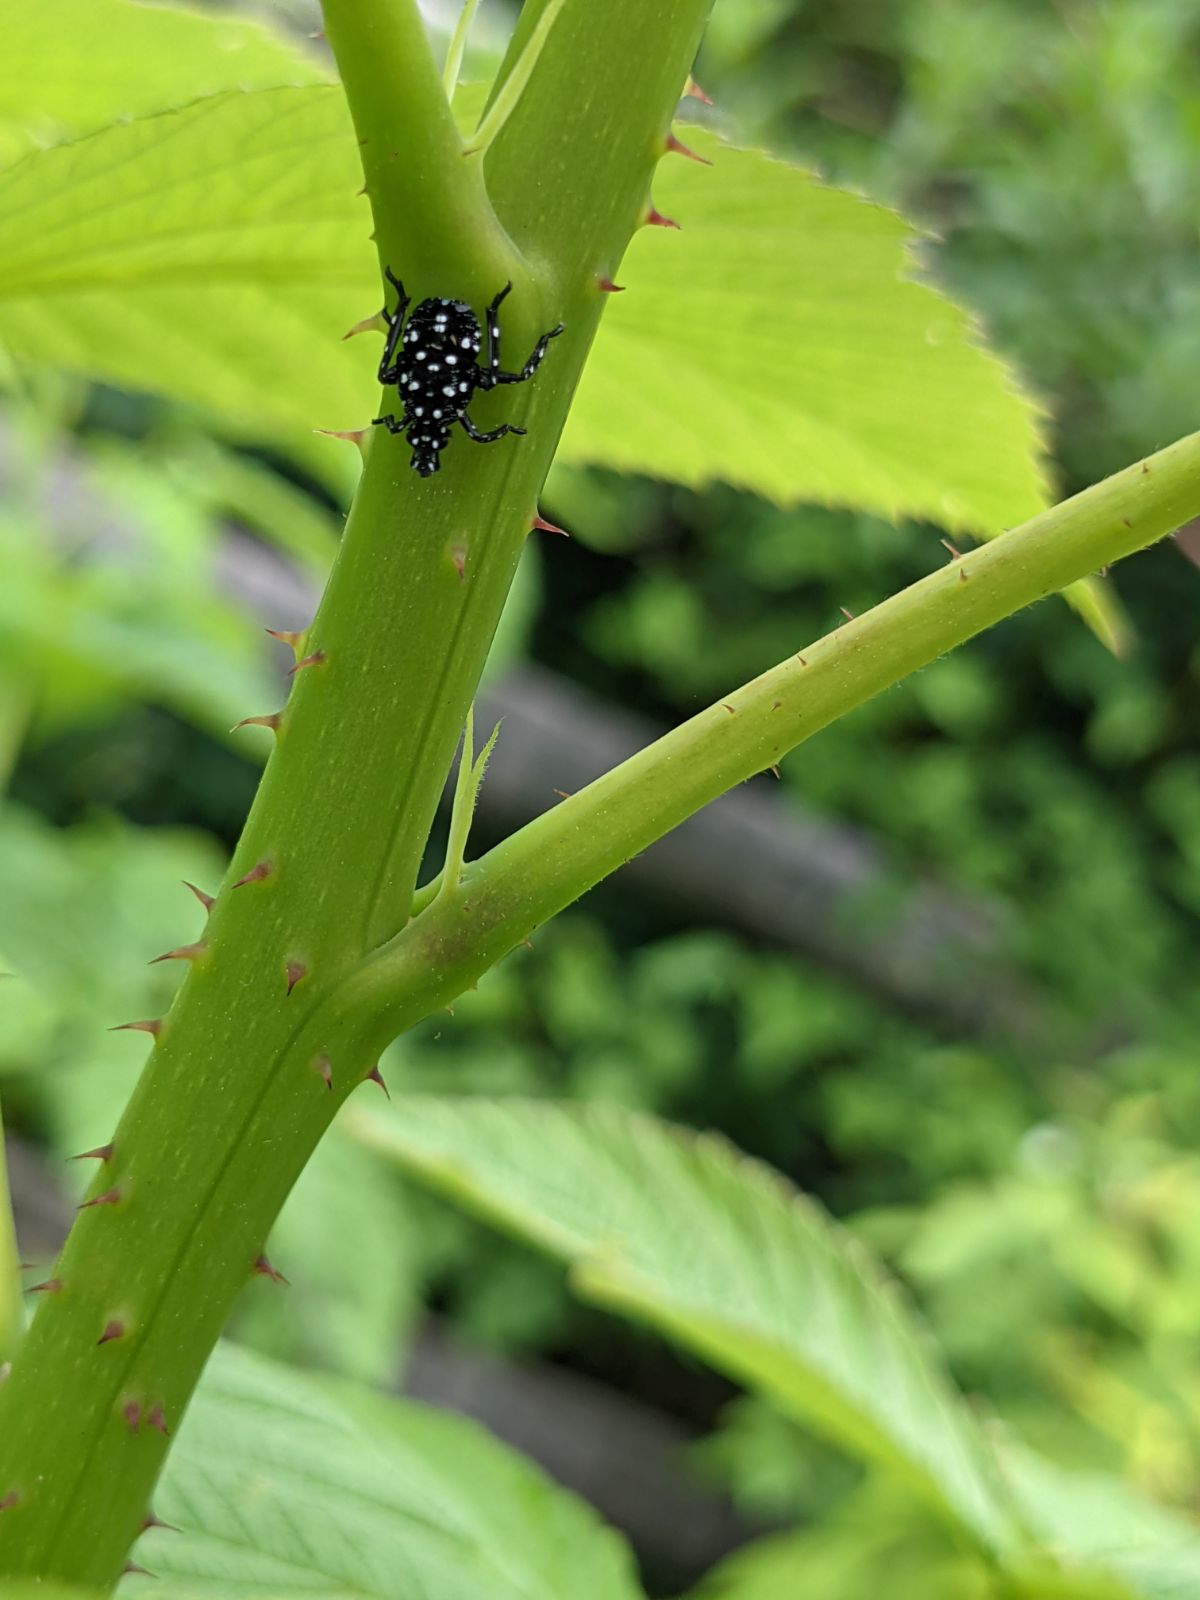 Black and white polka dot spotted lanternfly nymph on raspberry bush